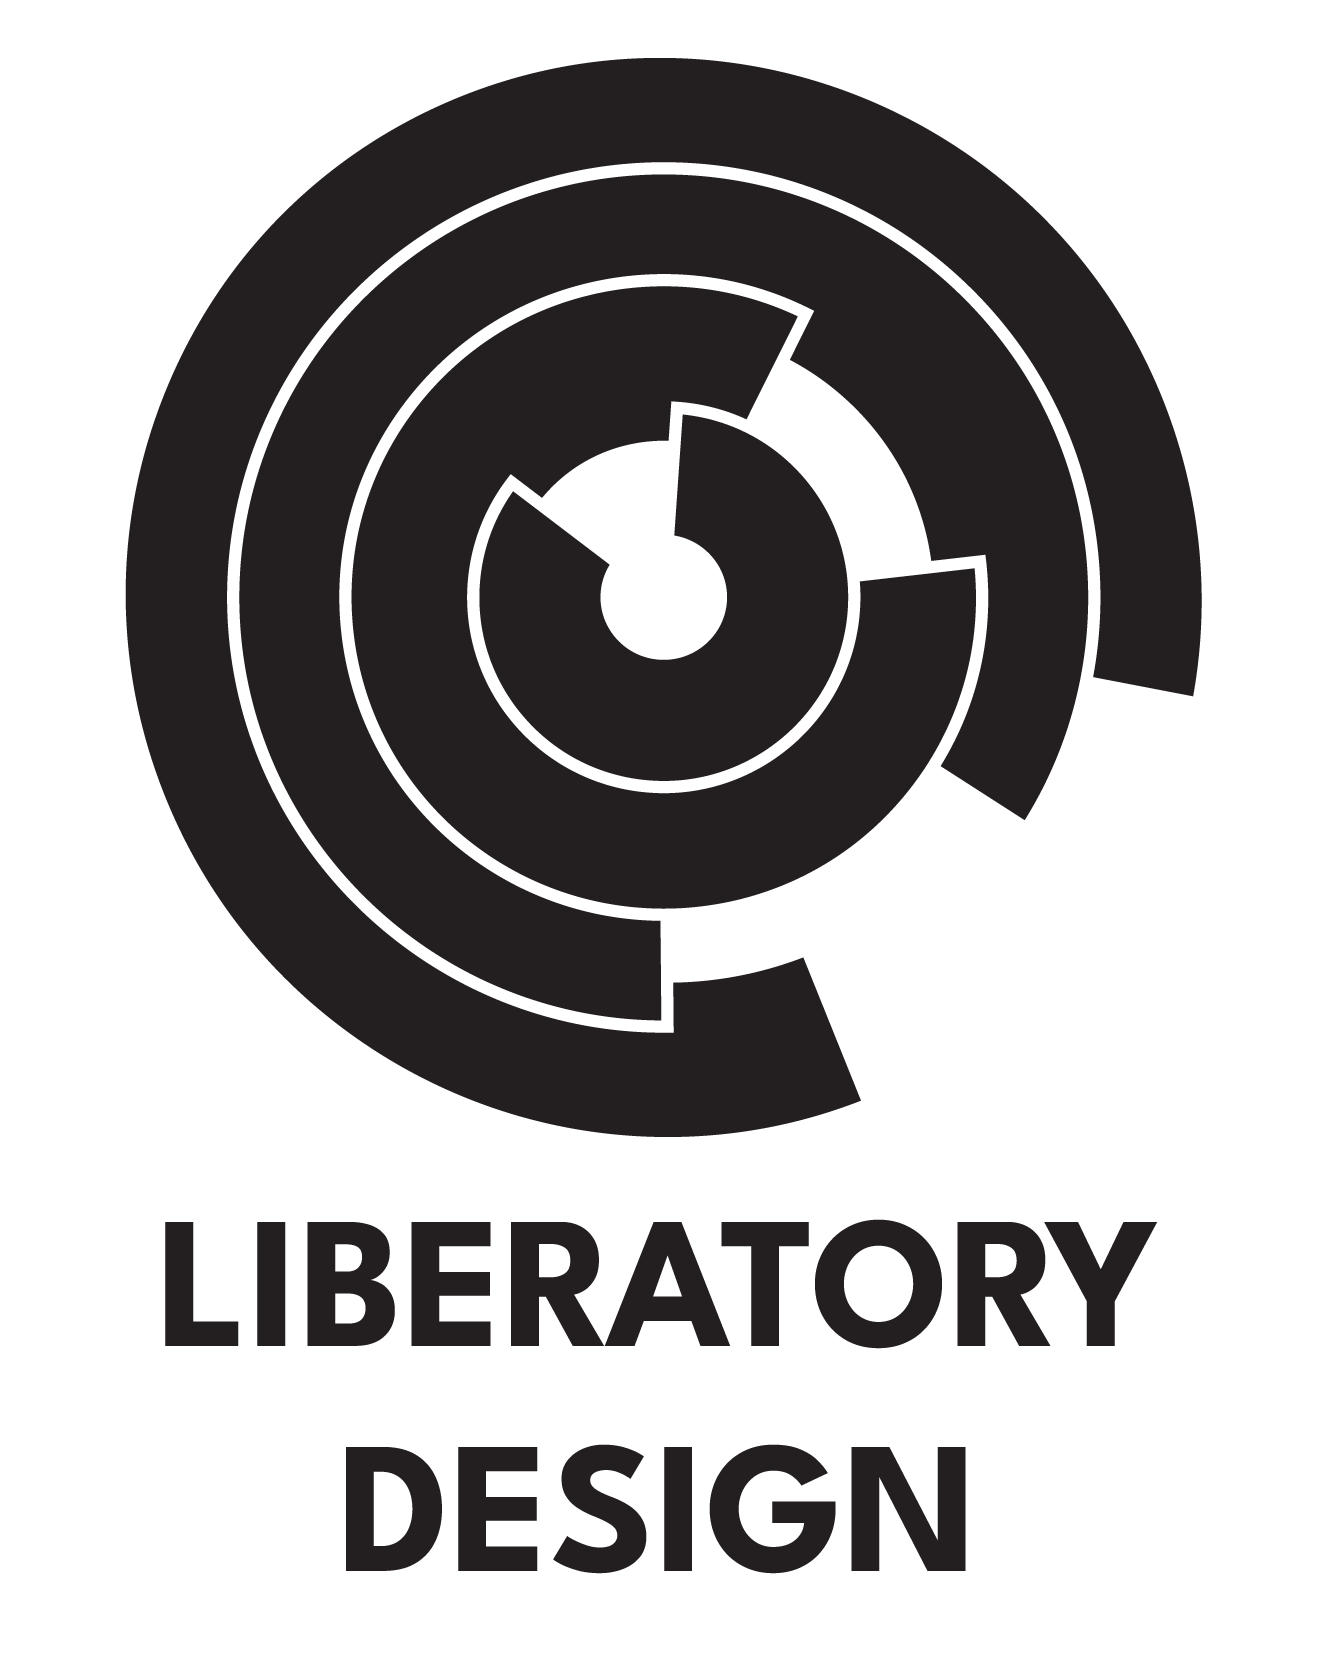 Liberatory Design